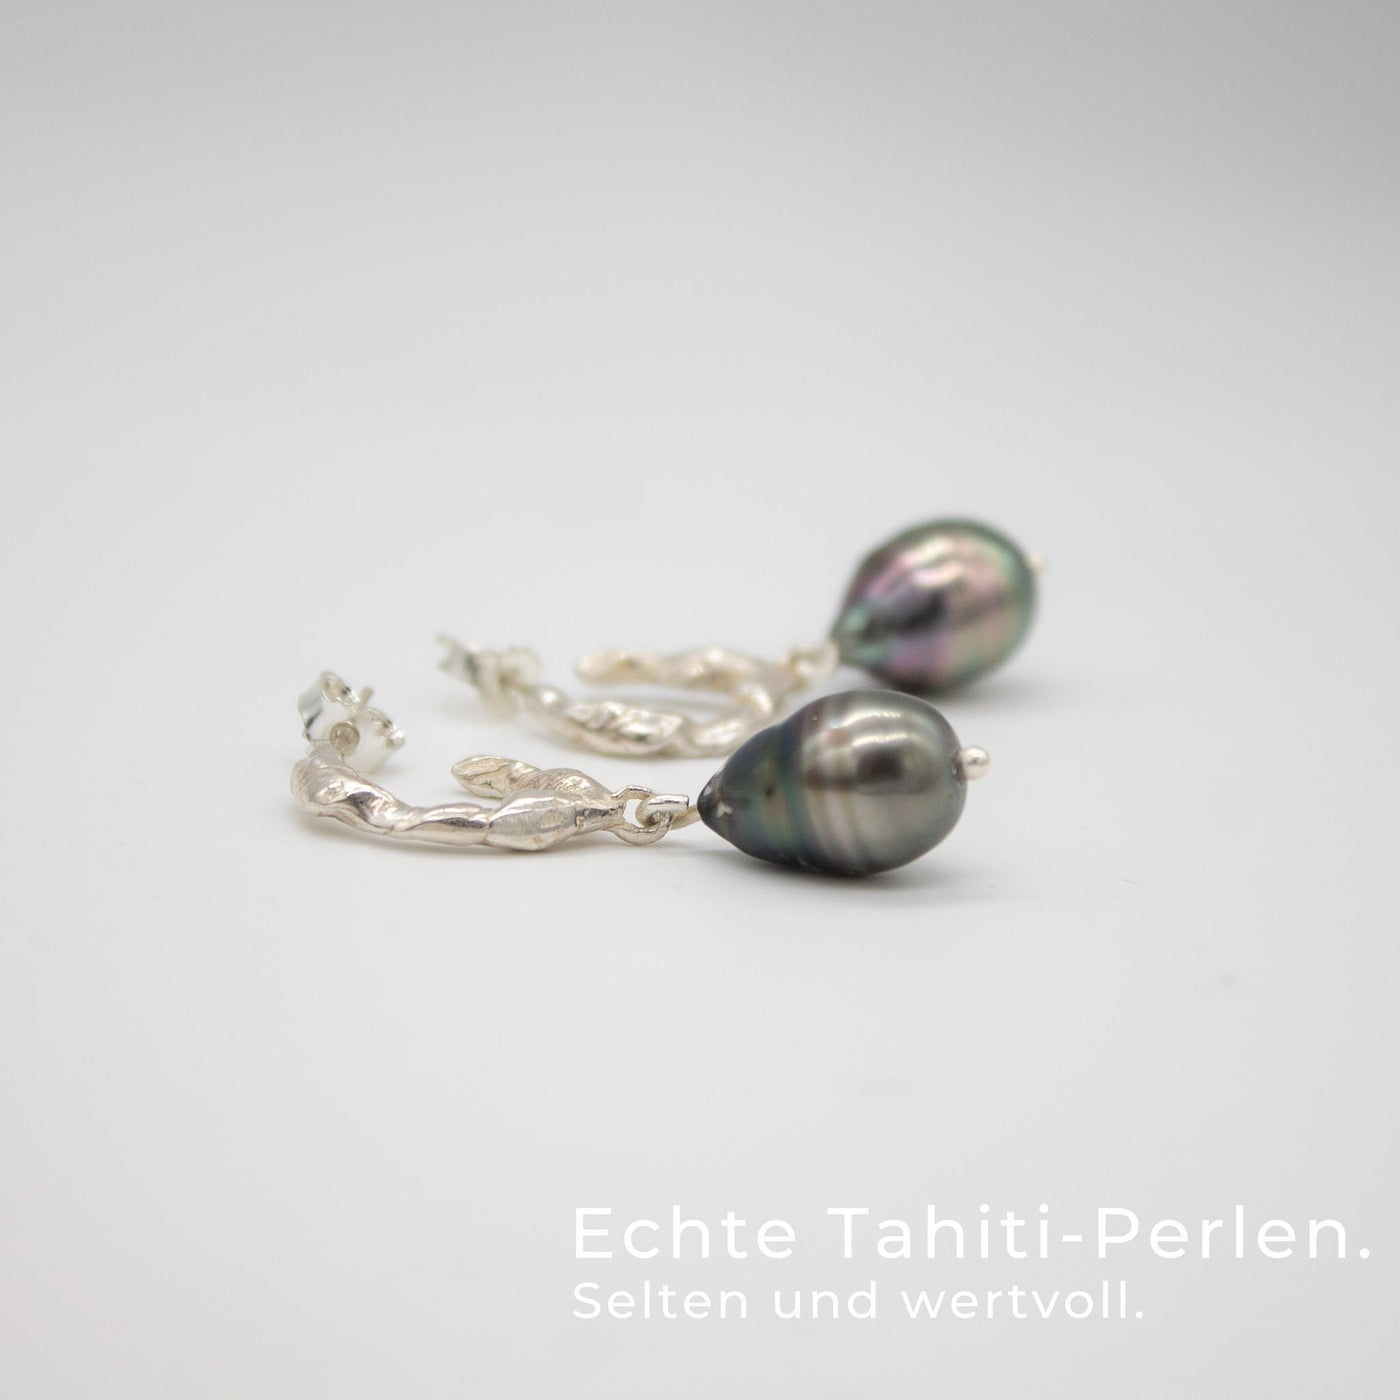 SANDEFJORD // Hoop earrings made of fine silver with a Tahitian pearl